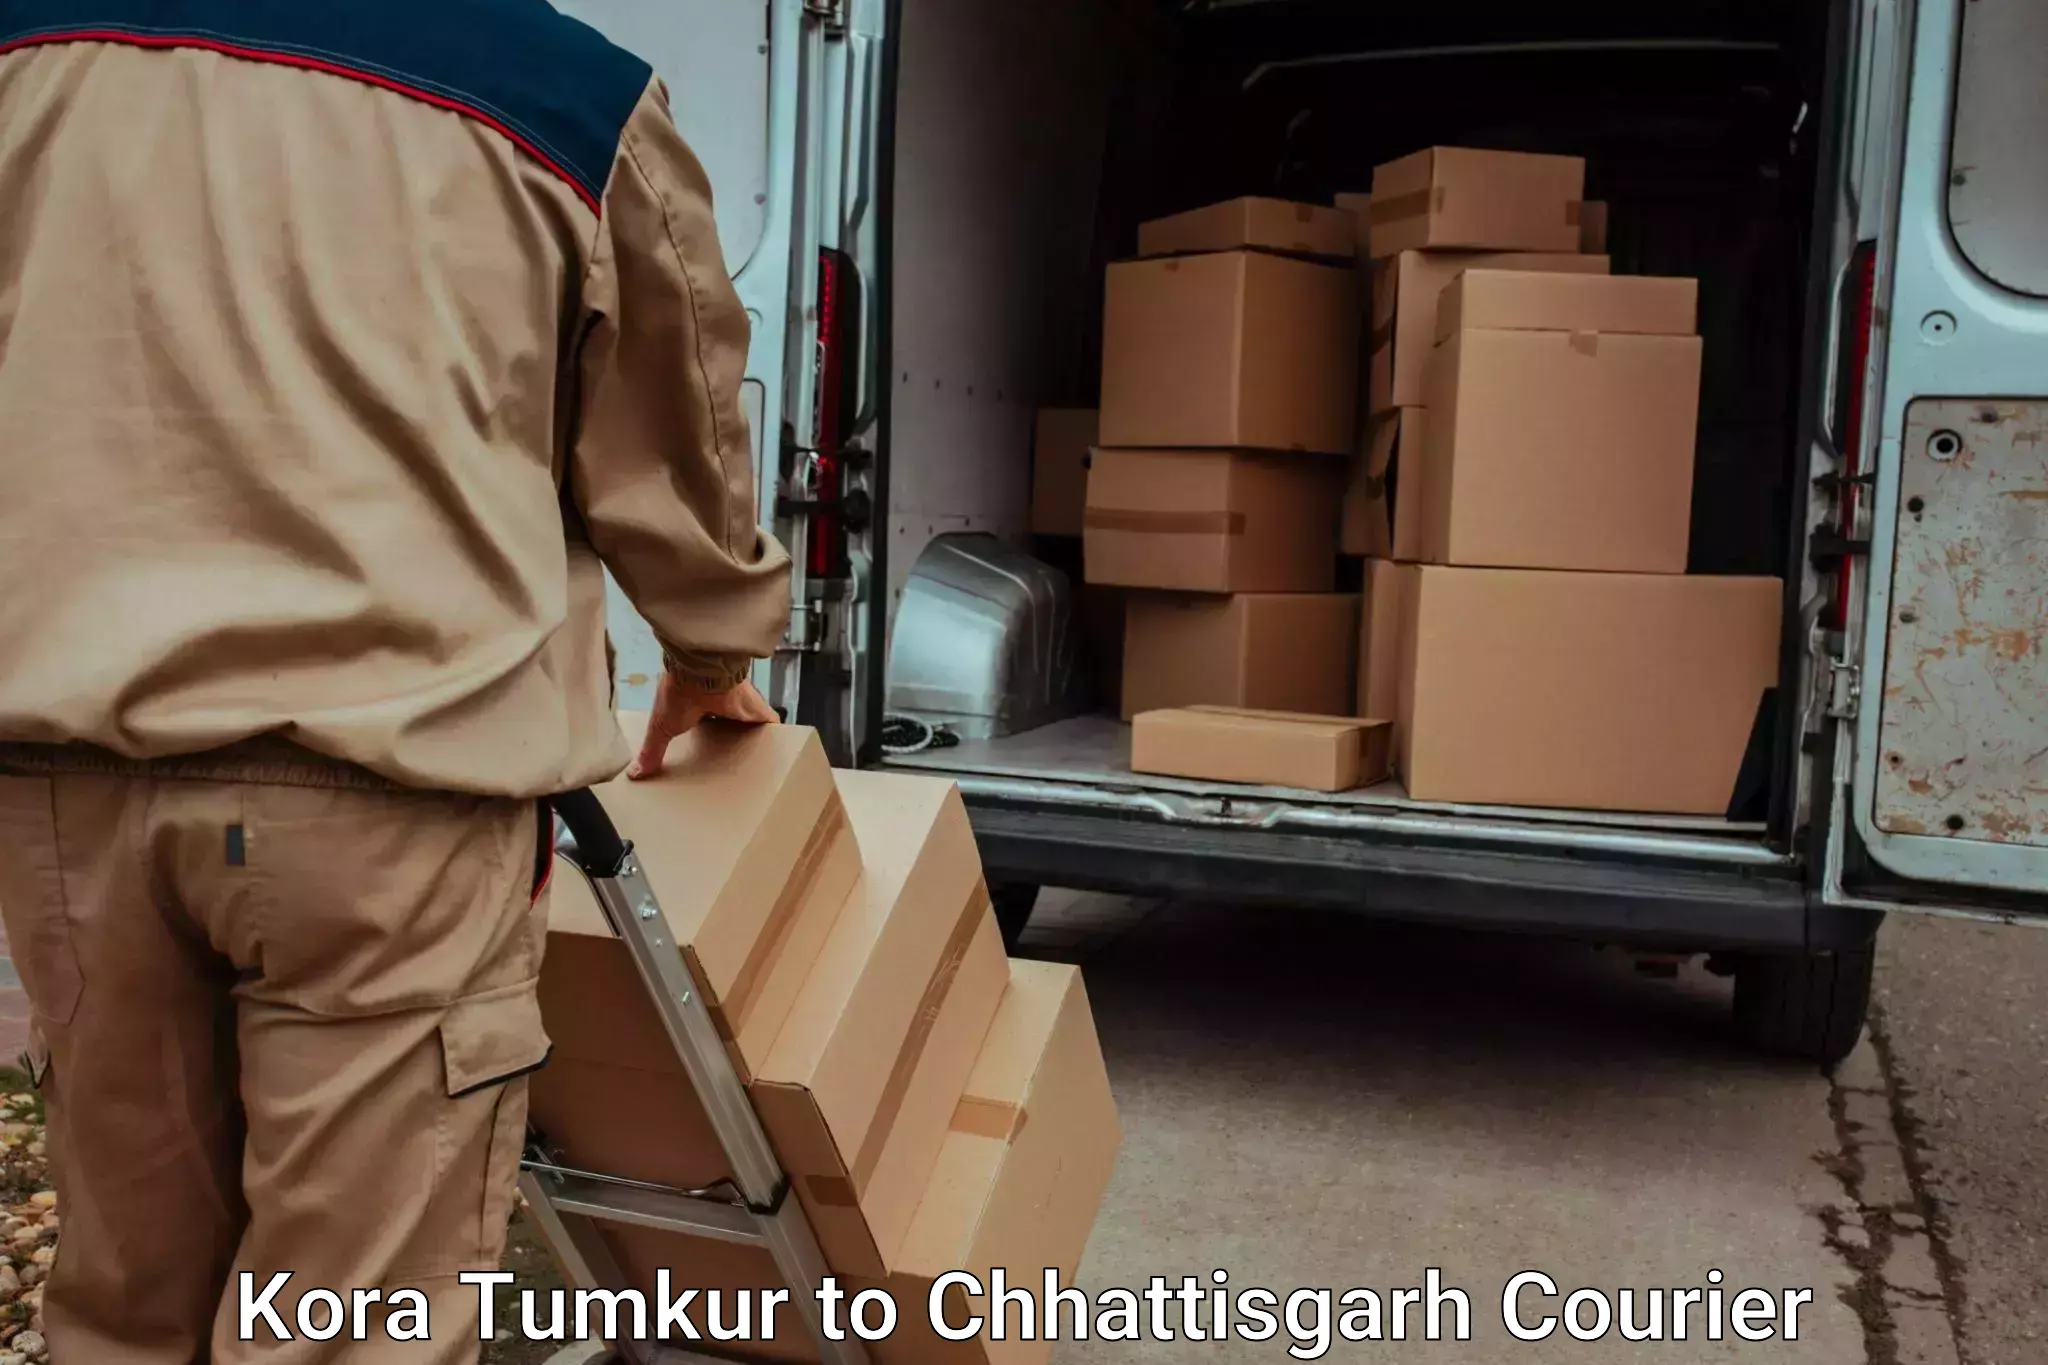 Luggage shipment specialists Kora Tumkur to Chhattisgarh